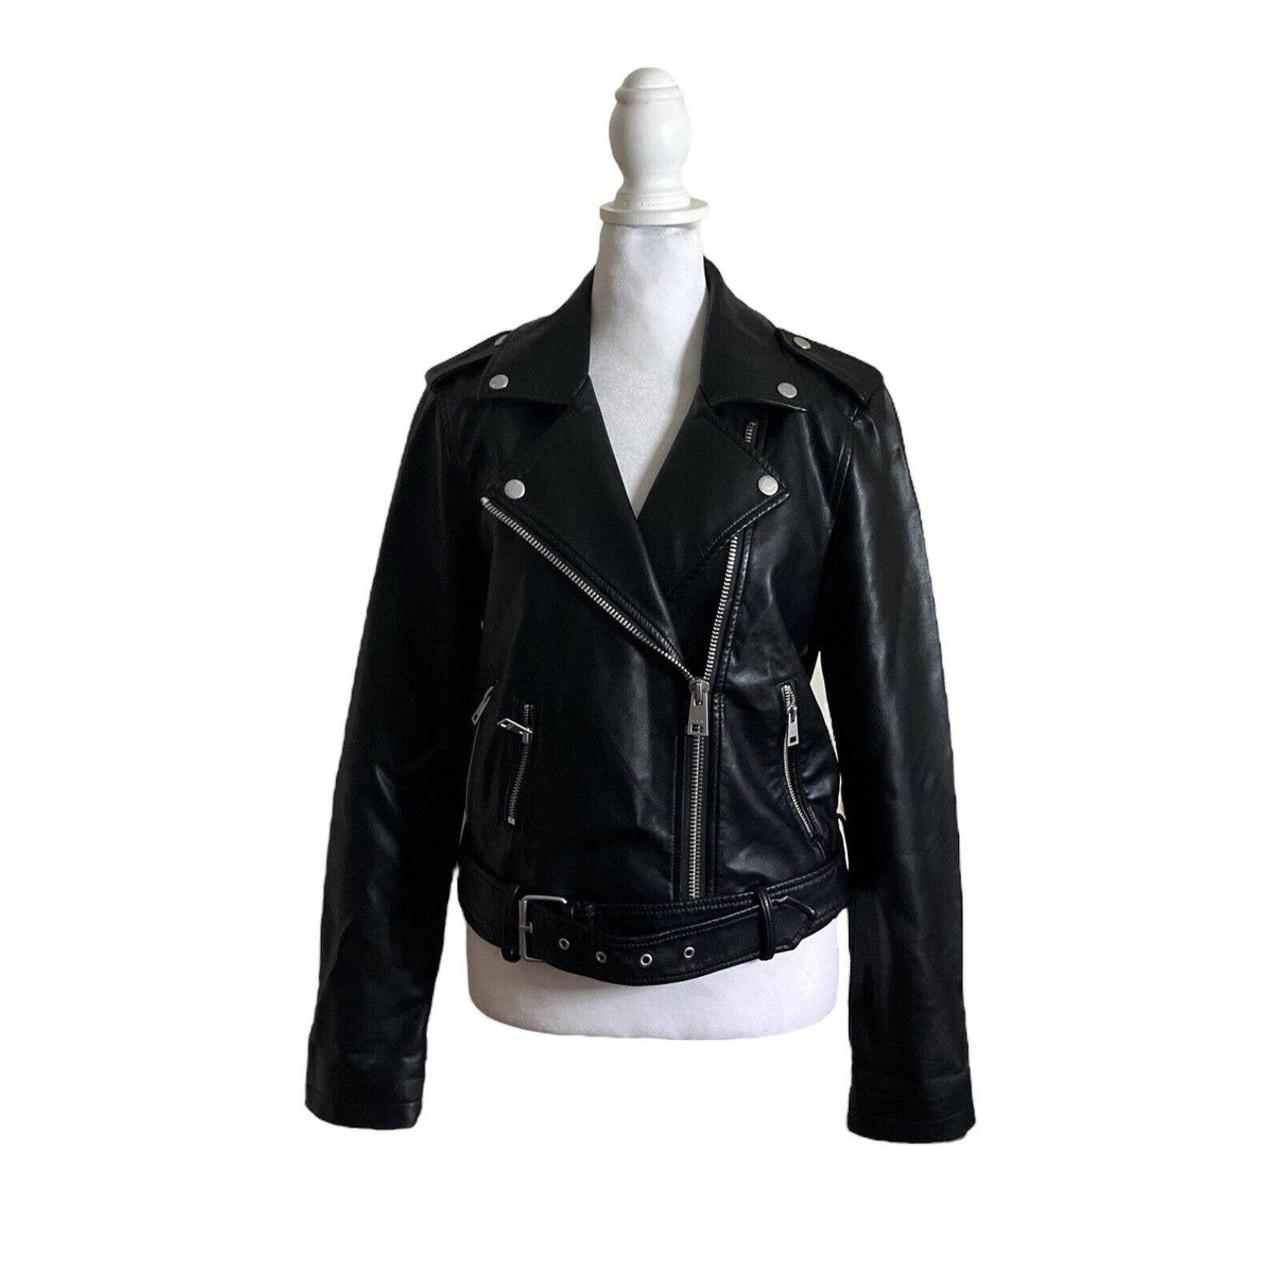 Levi's Women's Belted Faux Leather Moto Jacket